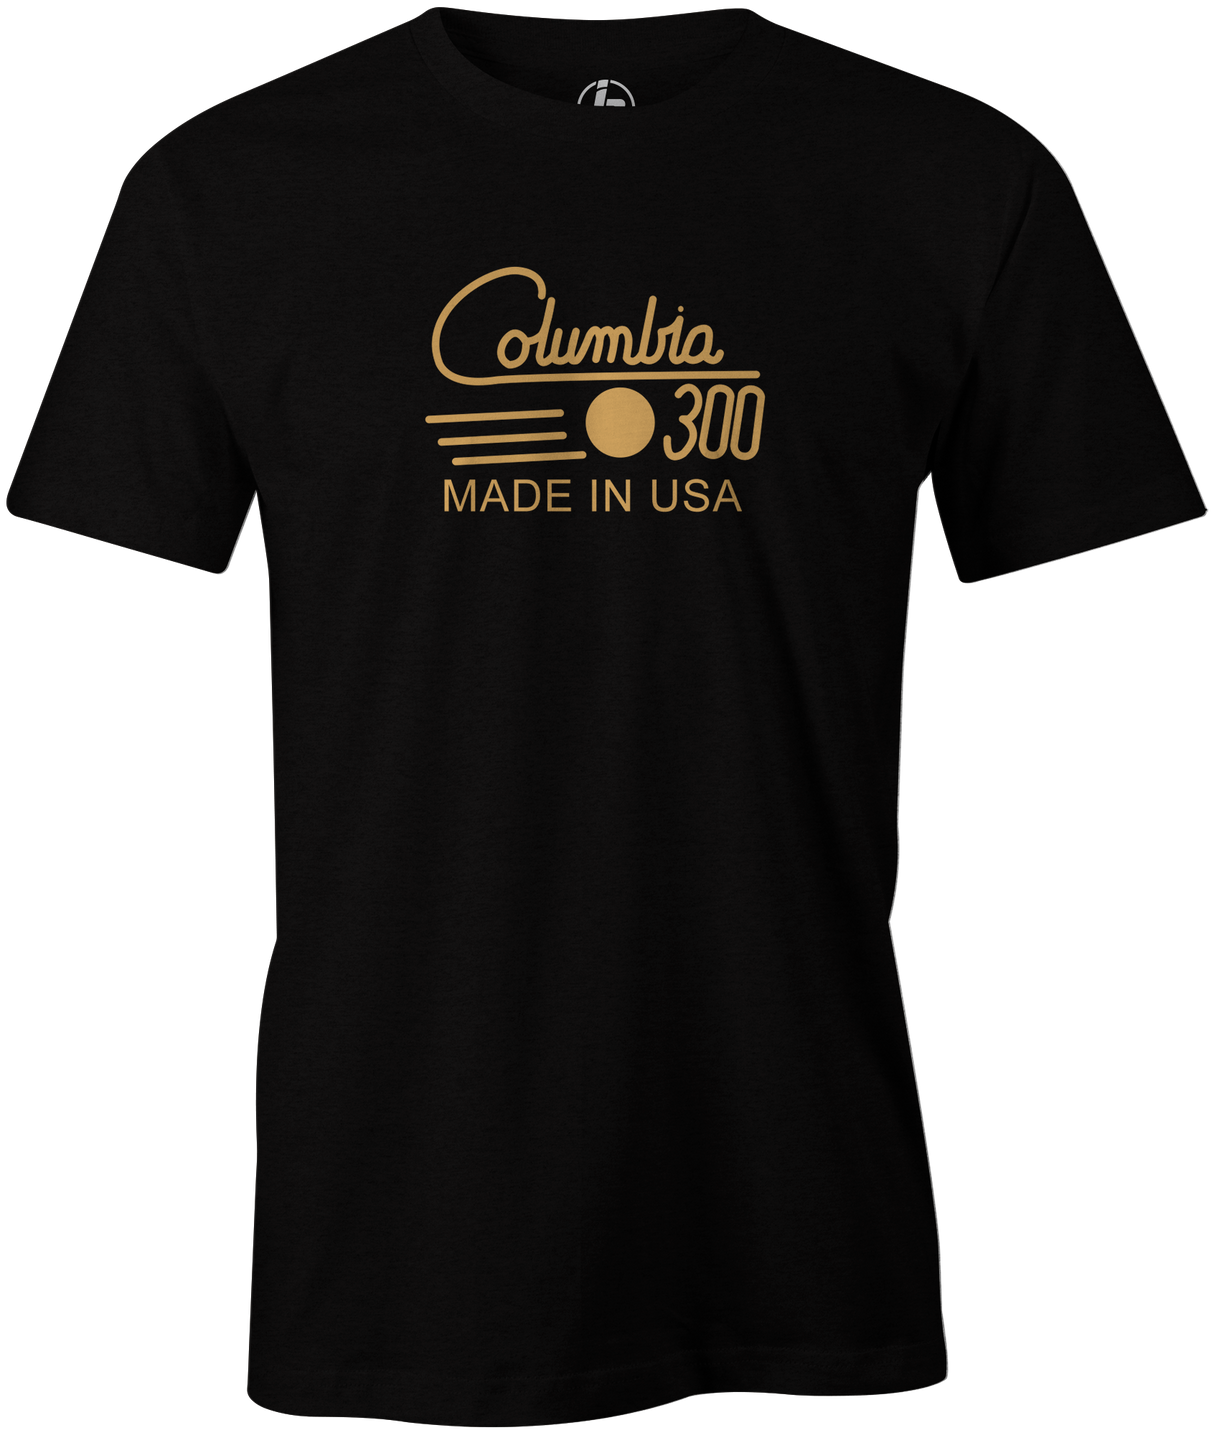 Columbia 300 Retro Men's T-Shirt, Black Vintage, tshirt, tee, tee-shirt, tee shirt, retro, cool, bowling ball